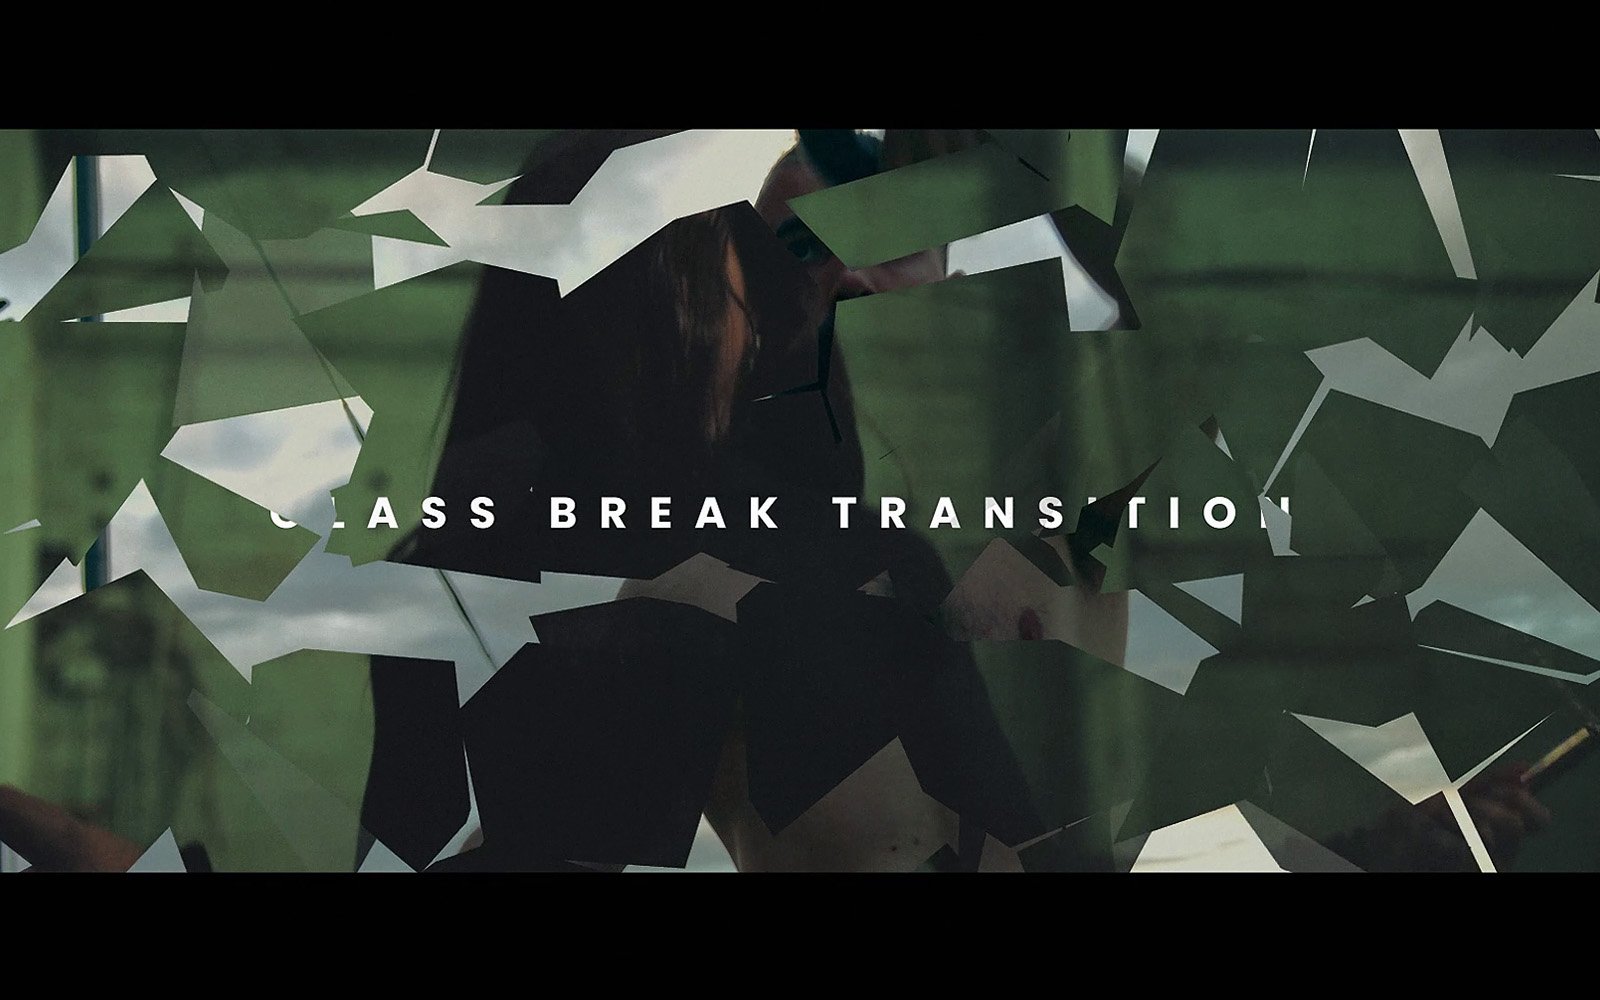 Glass Break Transition: (Mogrt) Premiere Pro transition